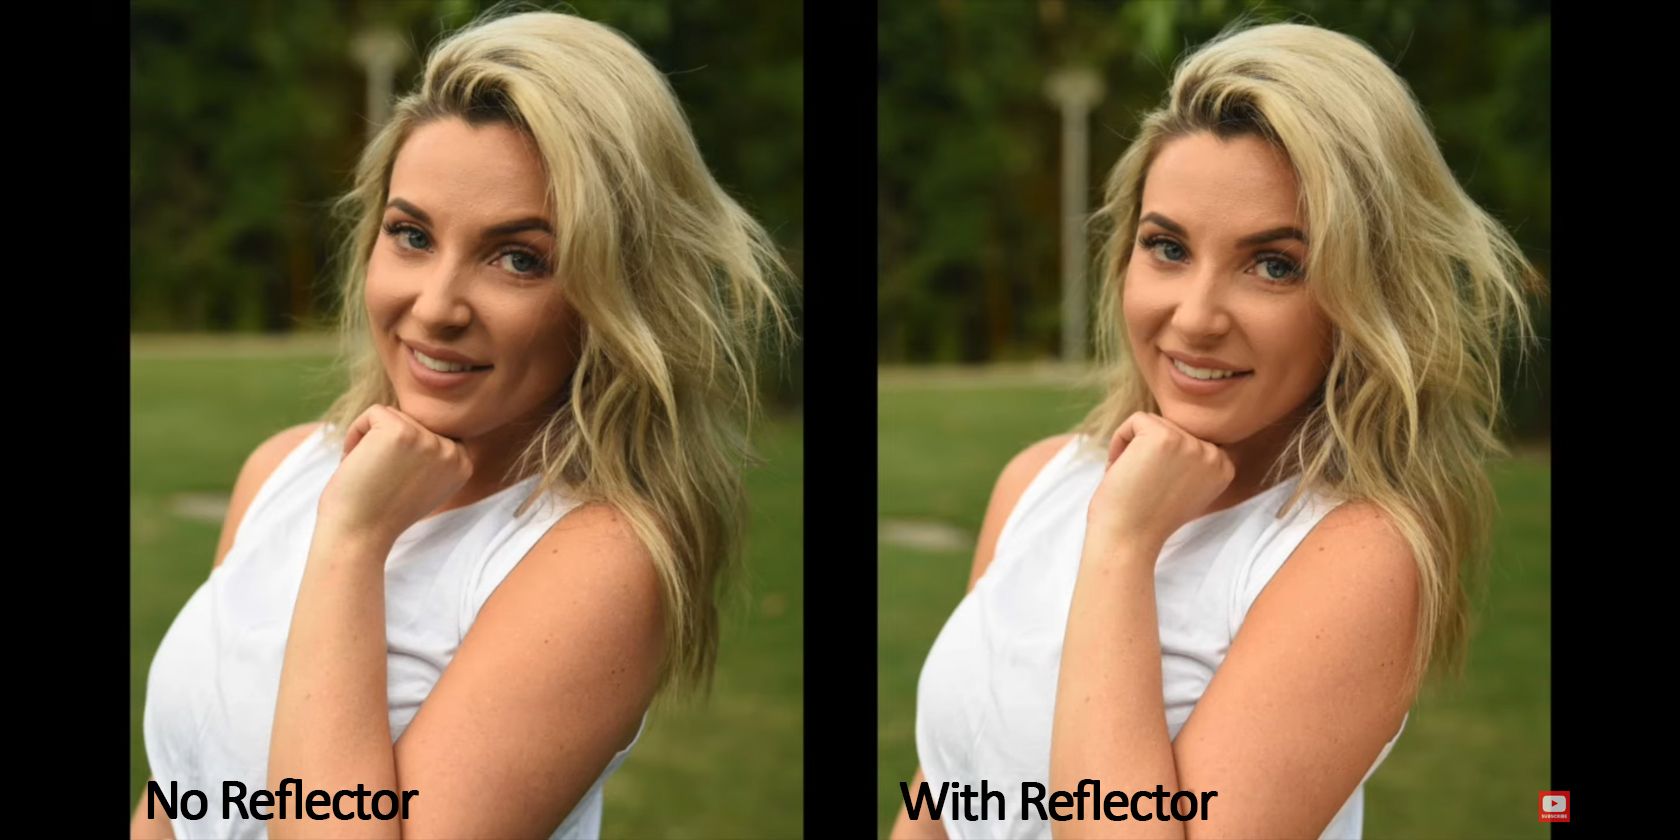 No reflector vs With reflector example